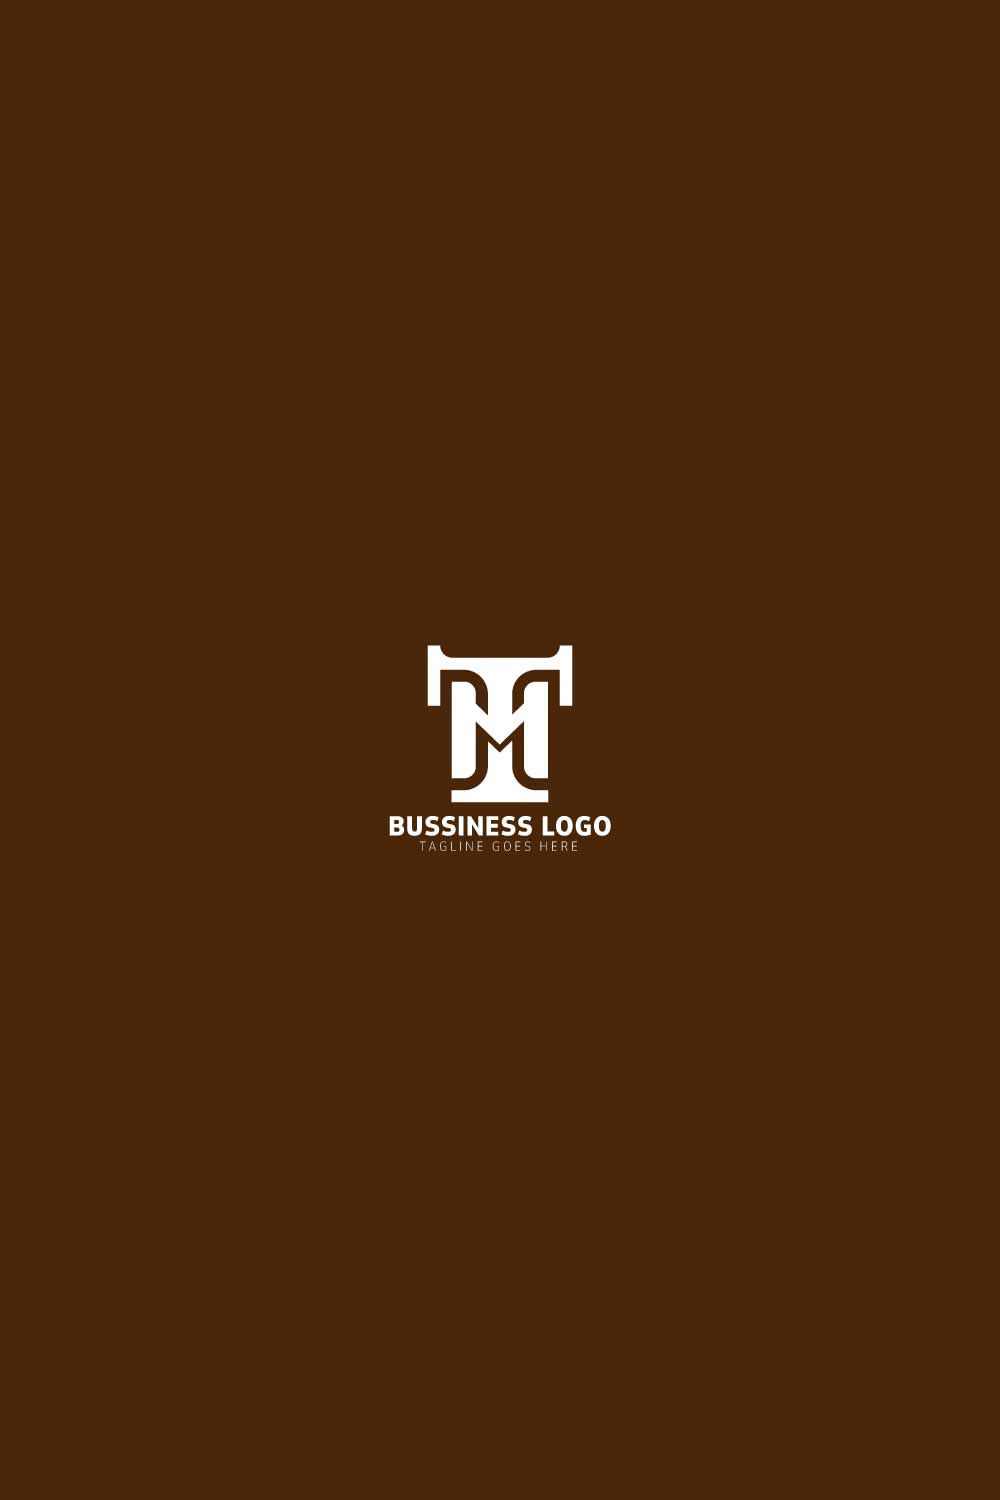 Professional TM Monogram logo design pinterest preview image.